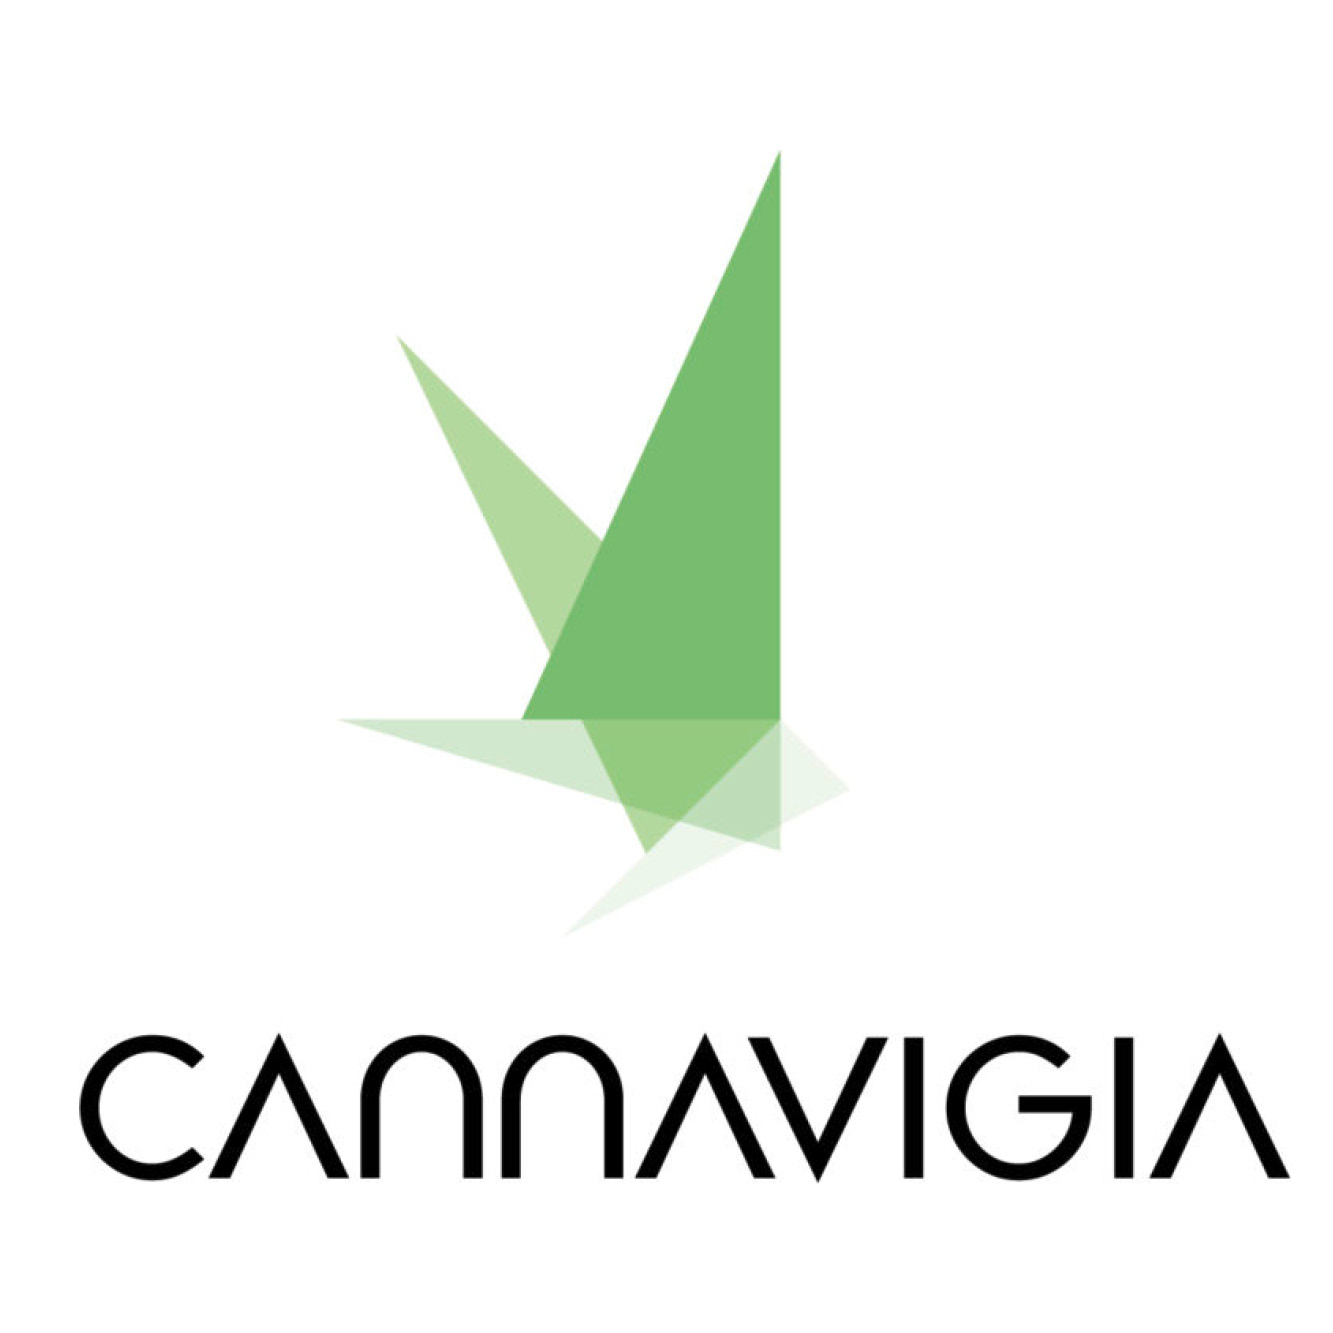 Cannavigia AG